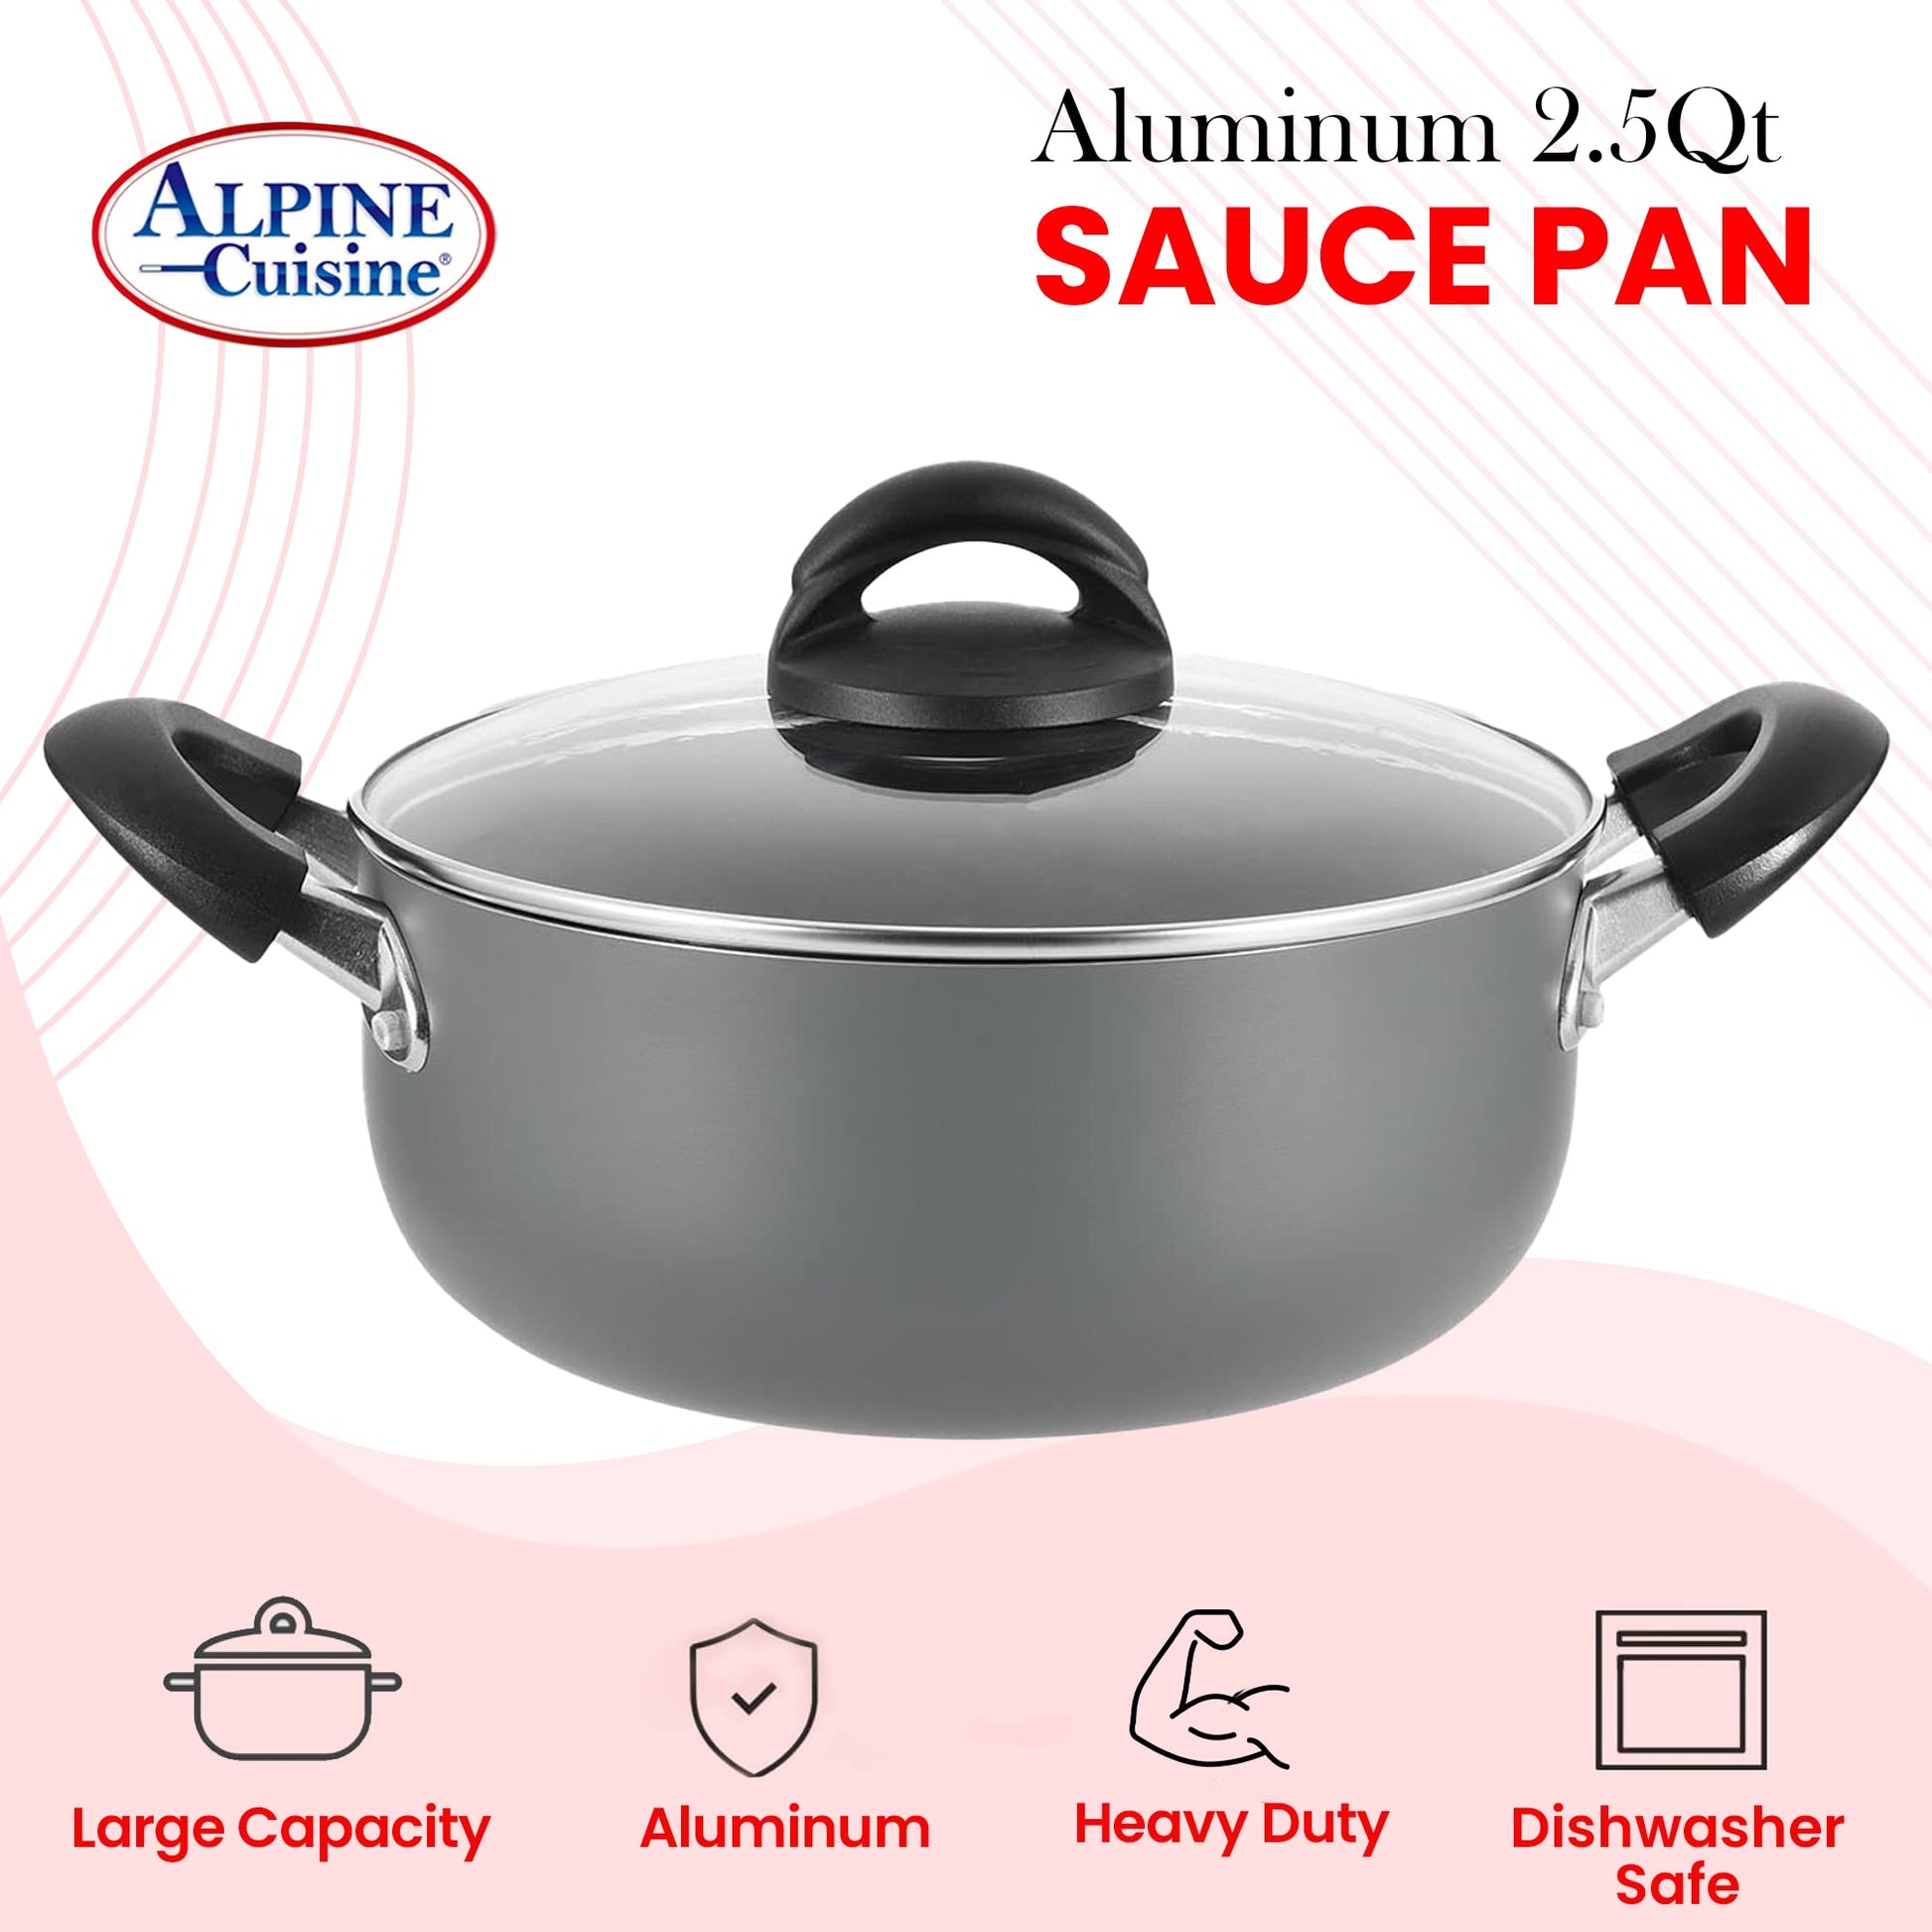 Alpine Cuisine Sauce Pan 2.5qt Aluminum Nonstick Coating Bakelite Hand